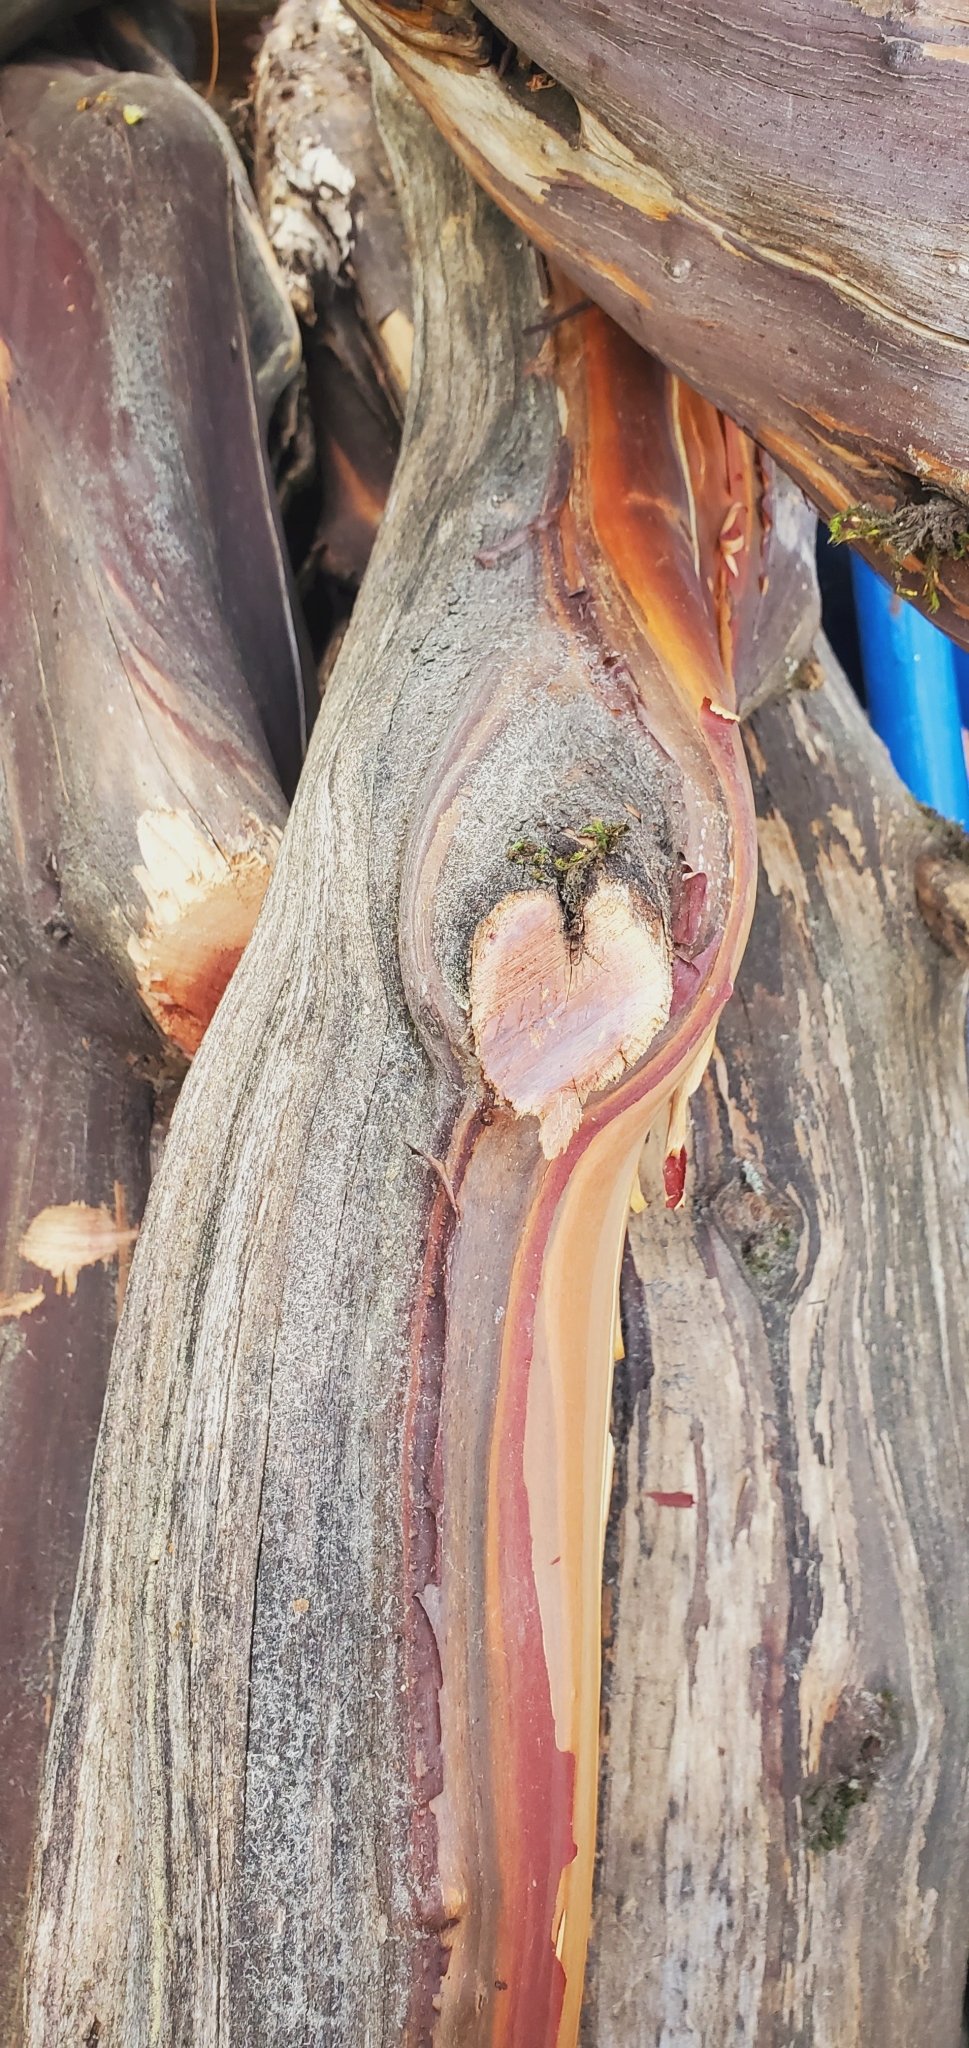 Manzanita Whale Tail Scoop ~ Hand Carved Wooden Spoon ~ Salt or Spice Spoon ~ Coffee Scoop ~ Tea Scoop - Blue Sage Family Farm